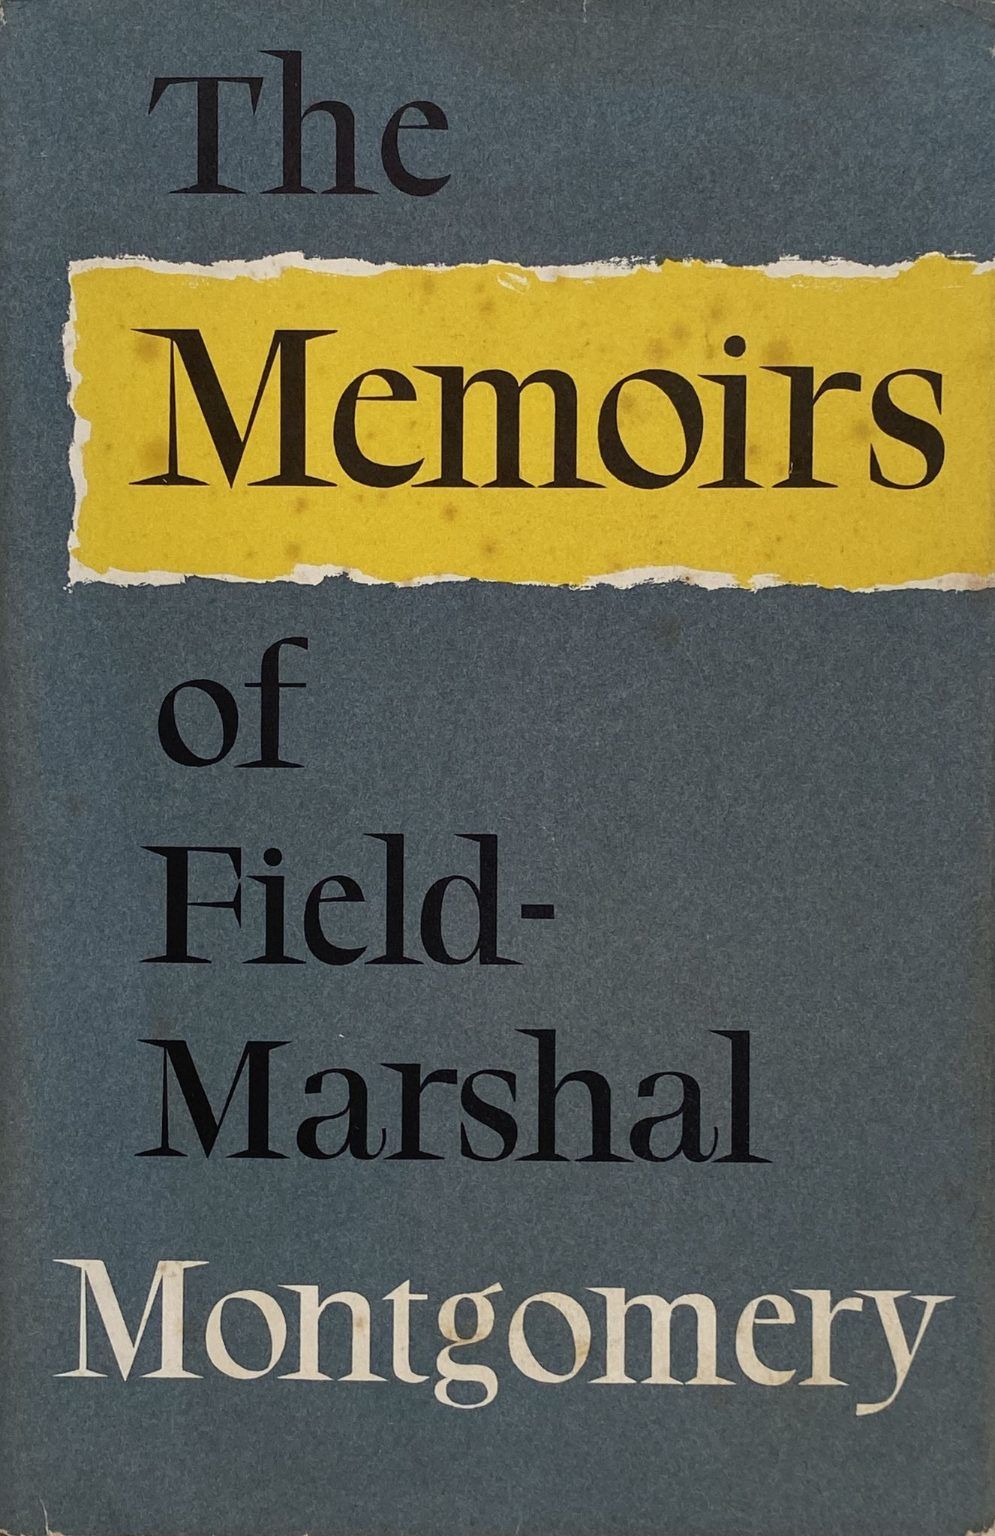 THE MEMOIRS of Field Marshal Montgomery